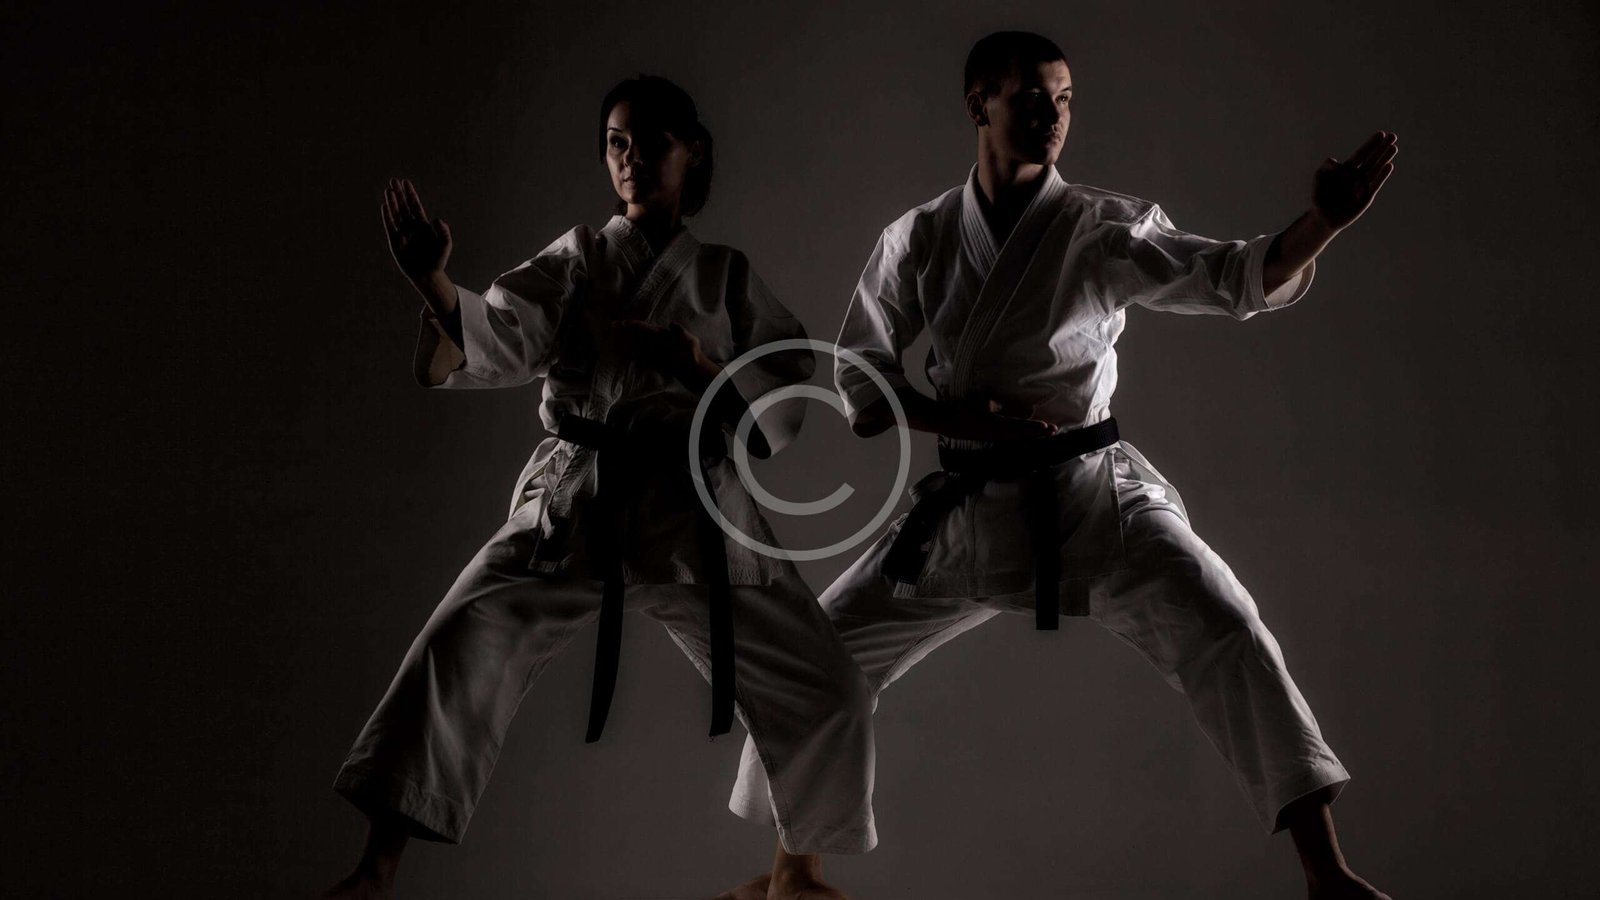 karate girl and boy posing against dark background